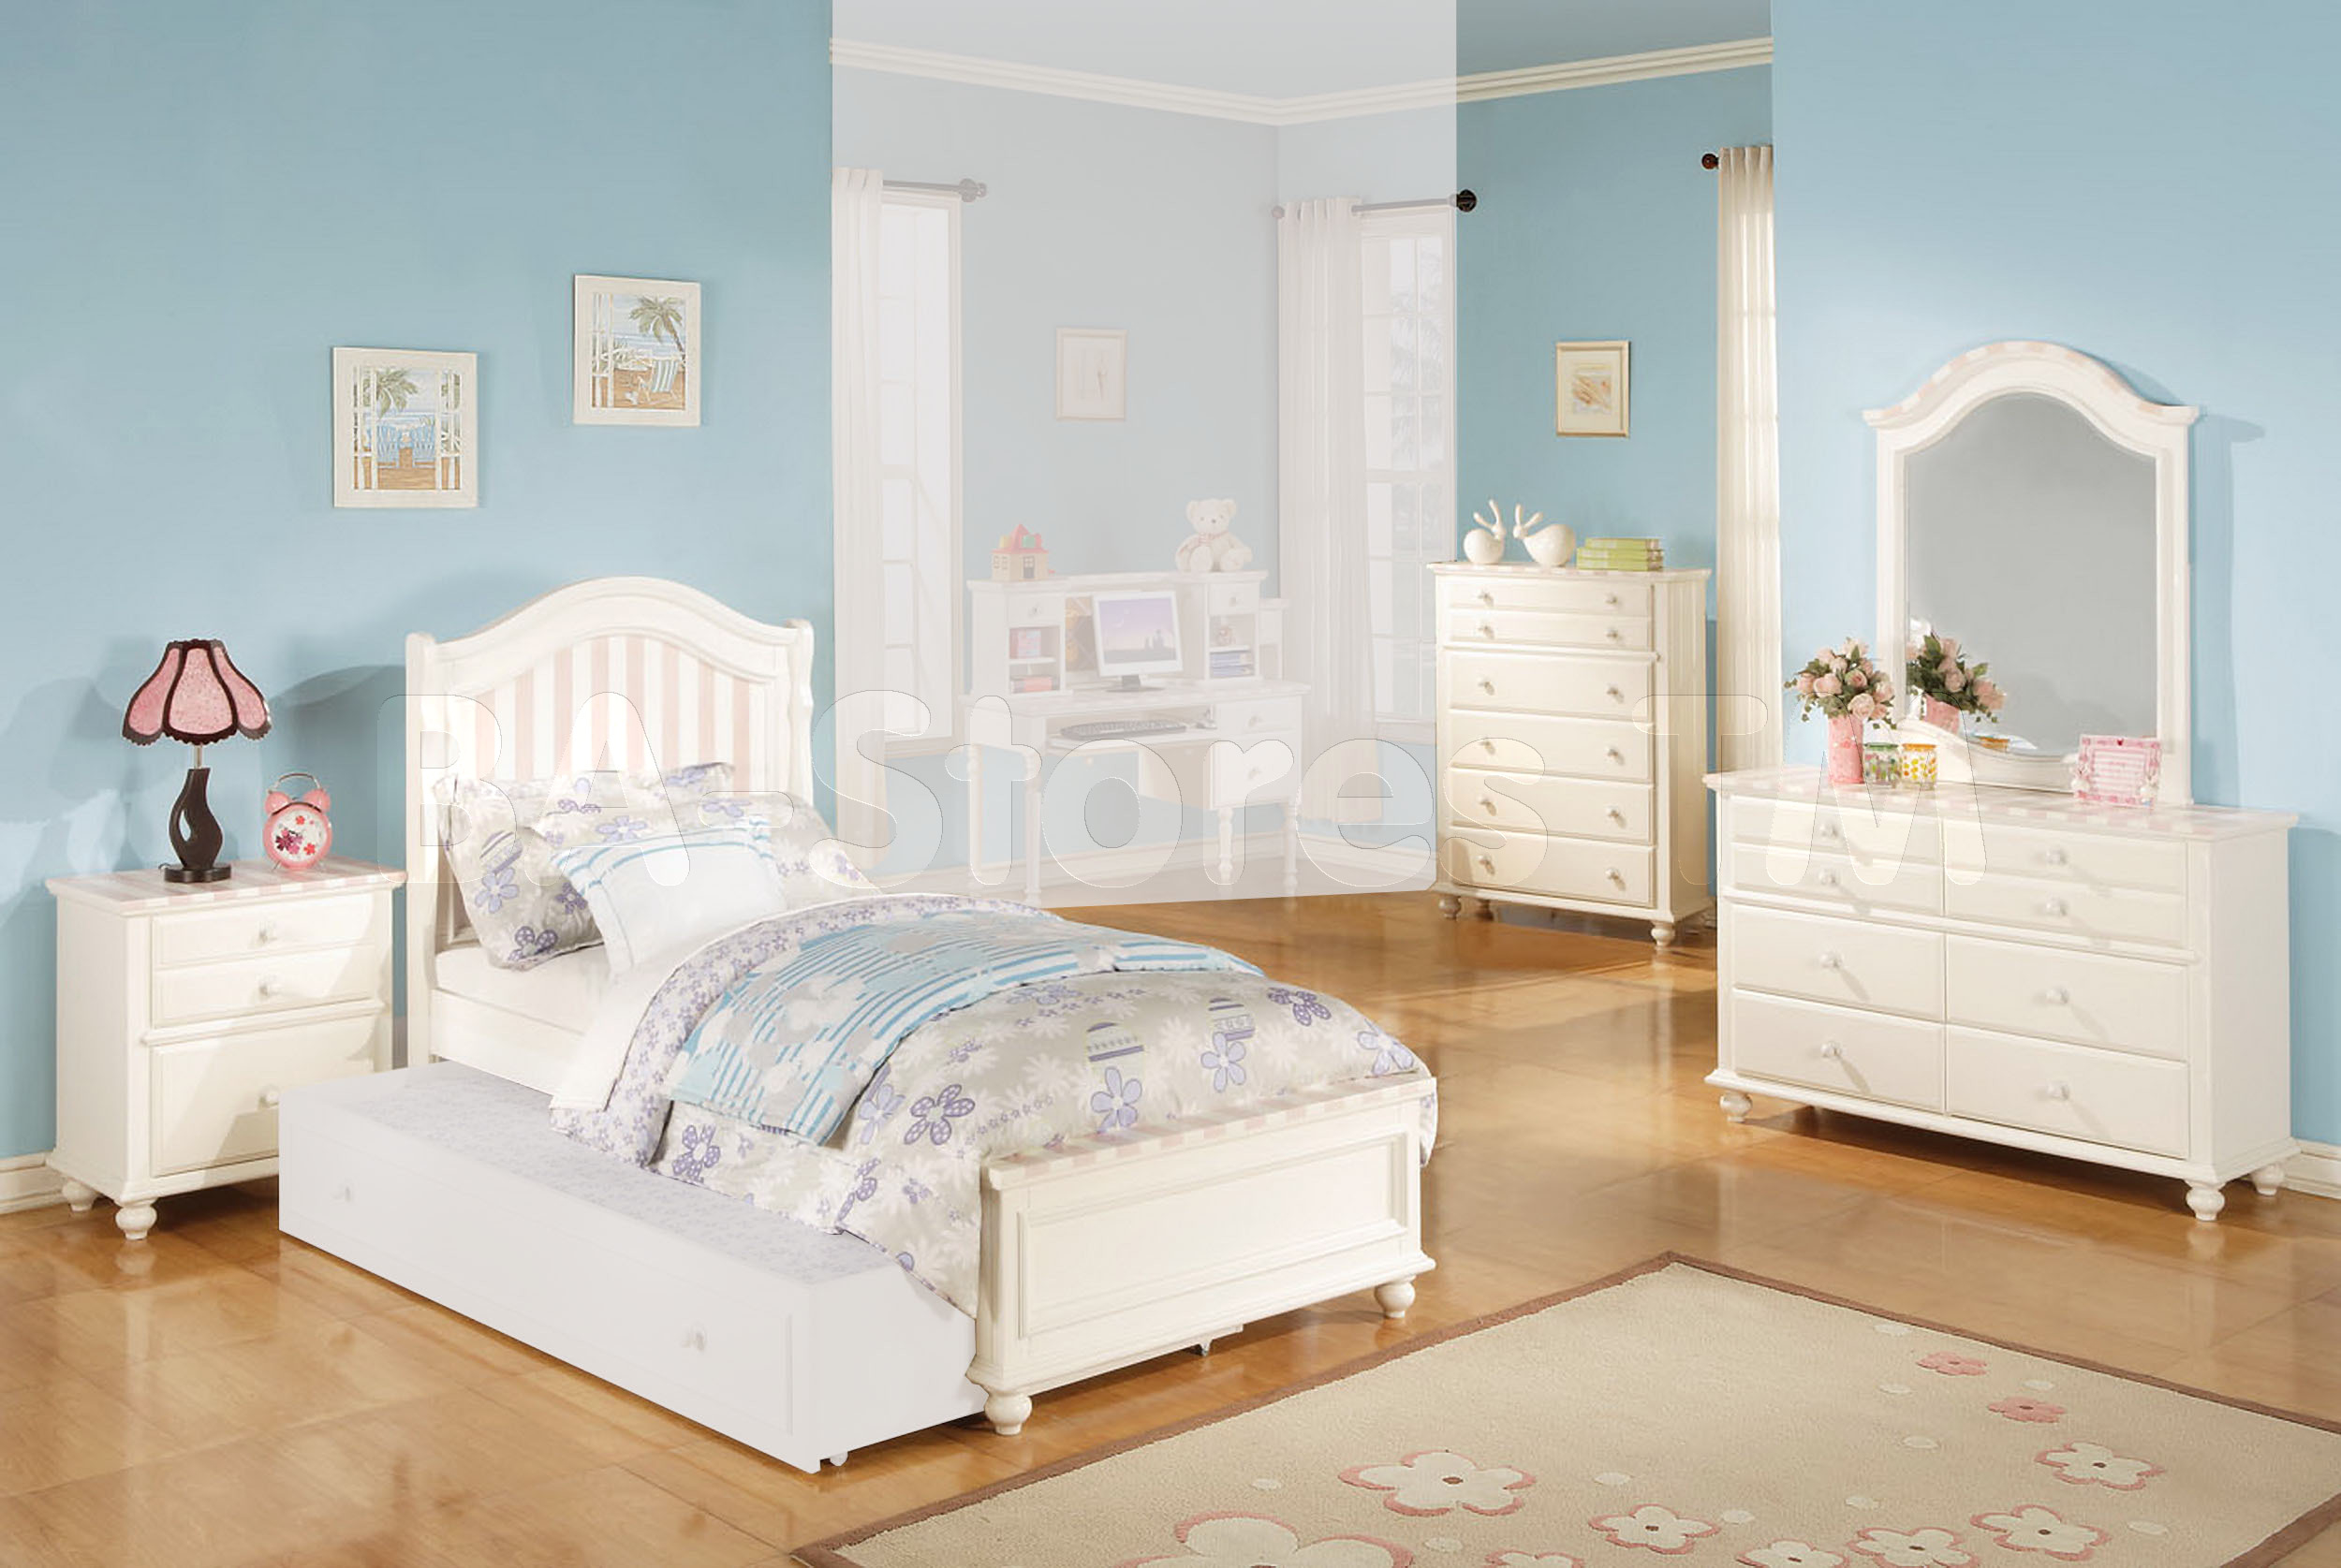 Bedrooms Light Blue For Girls 850611 Hd Wallpaper